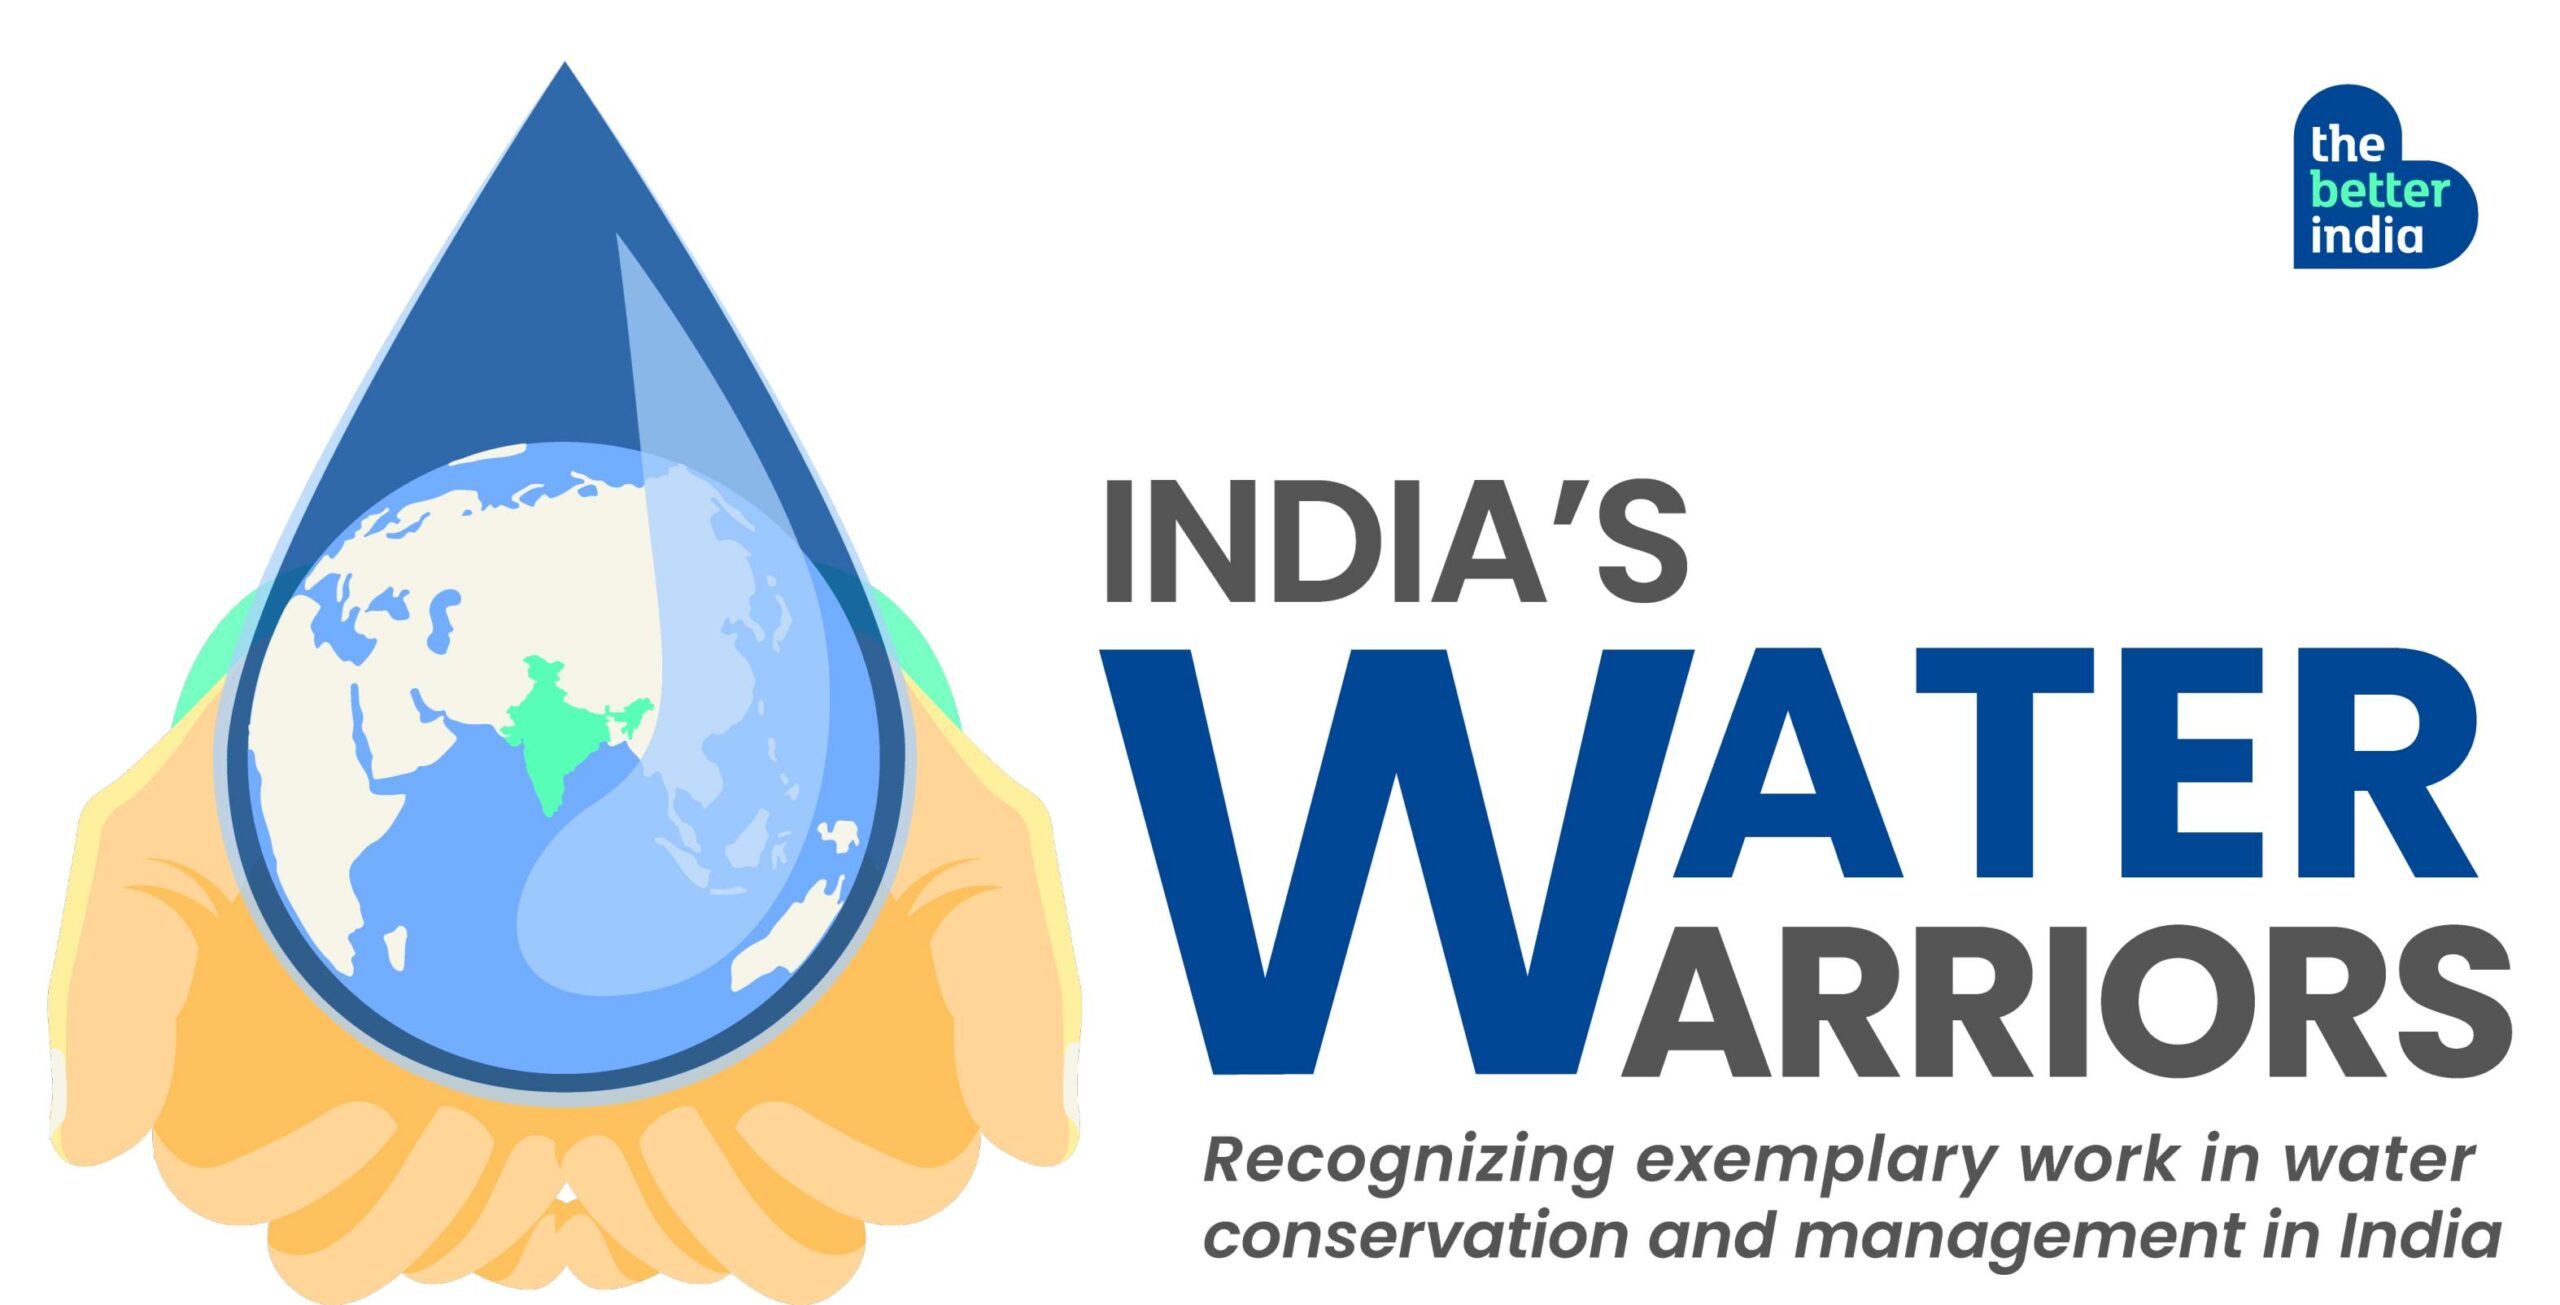 Prajurit air India adalah inisiatif pertama dari jenisnya oleh The Better India